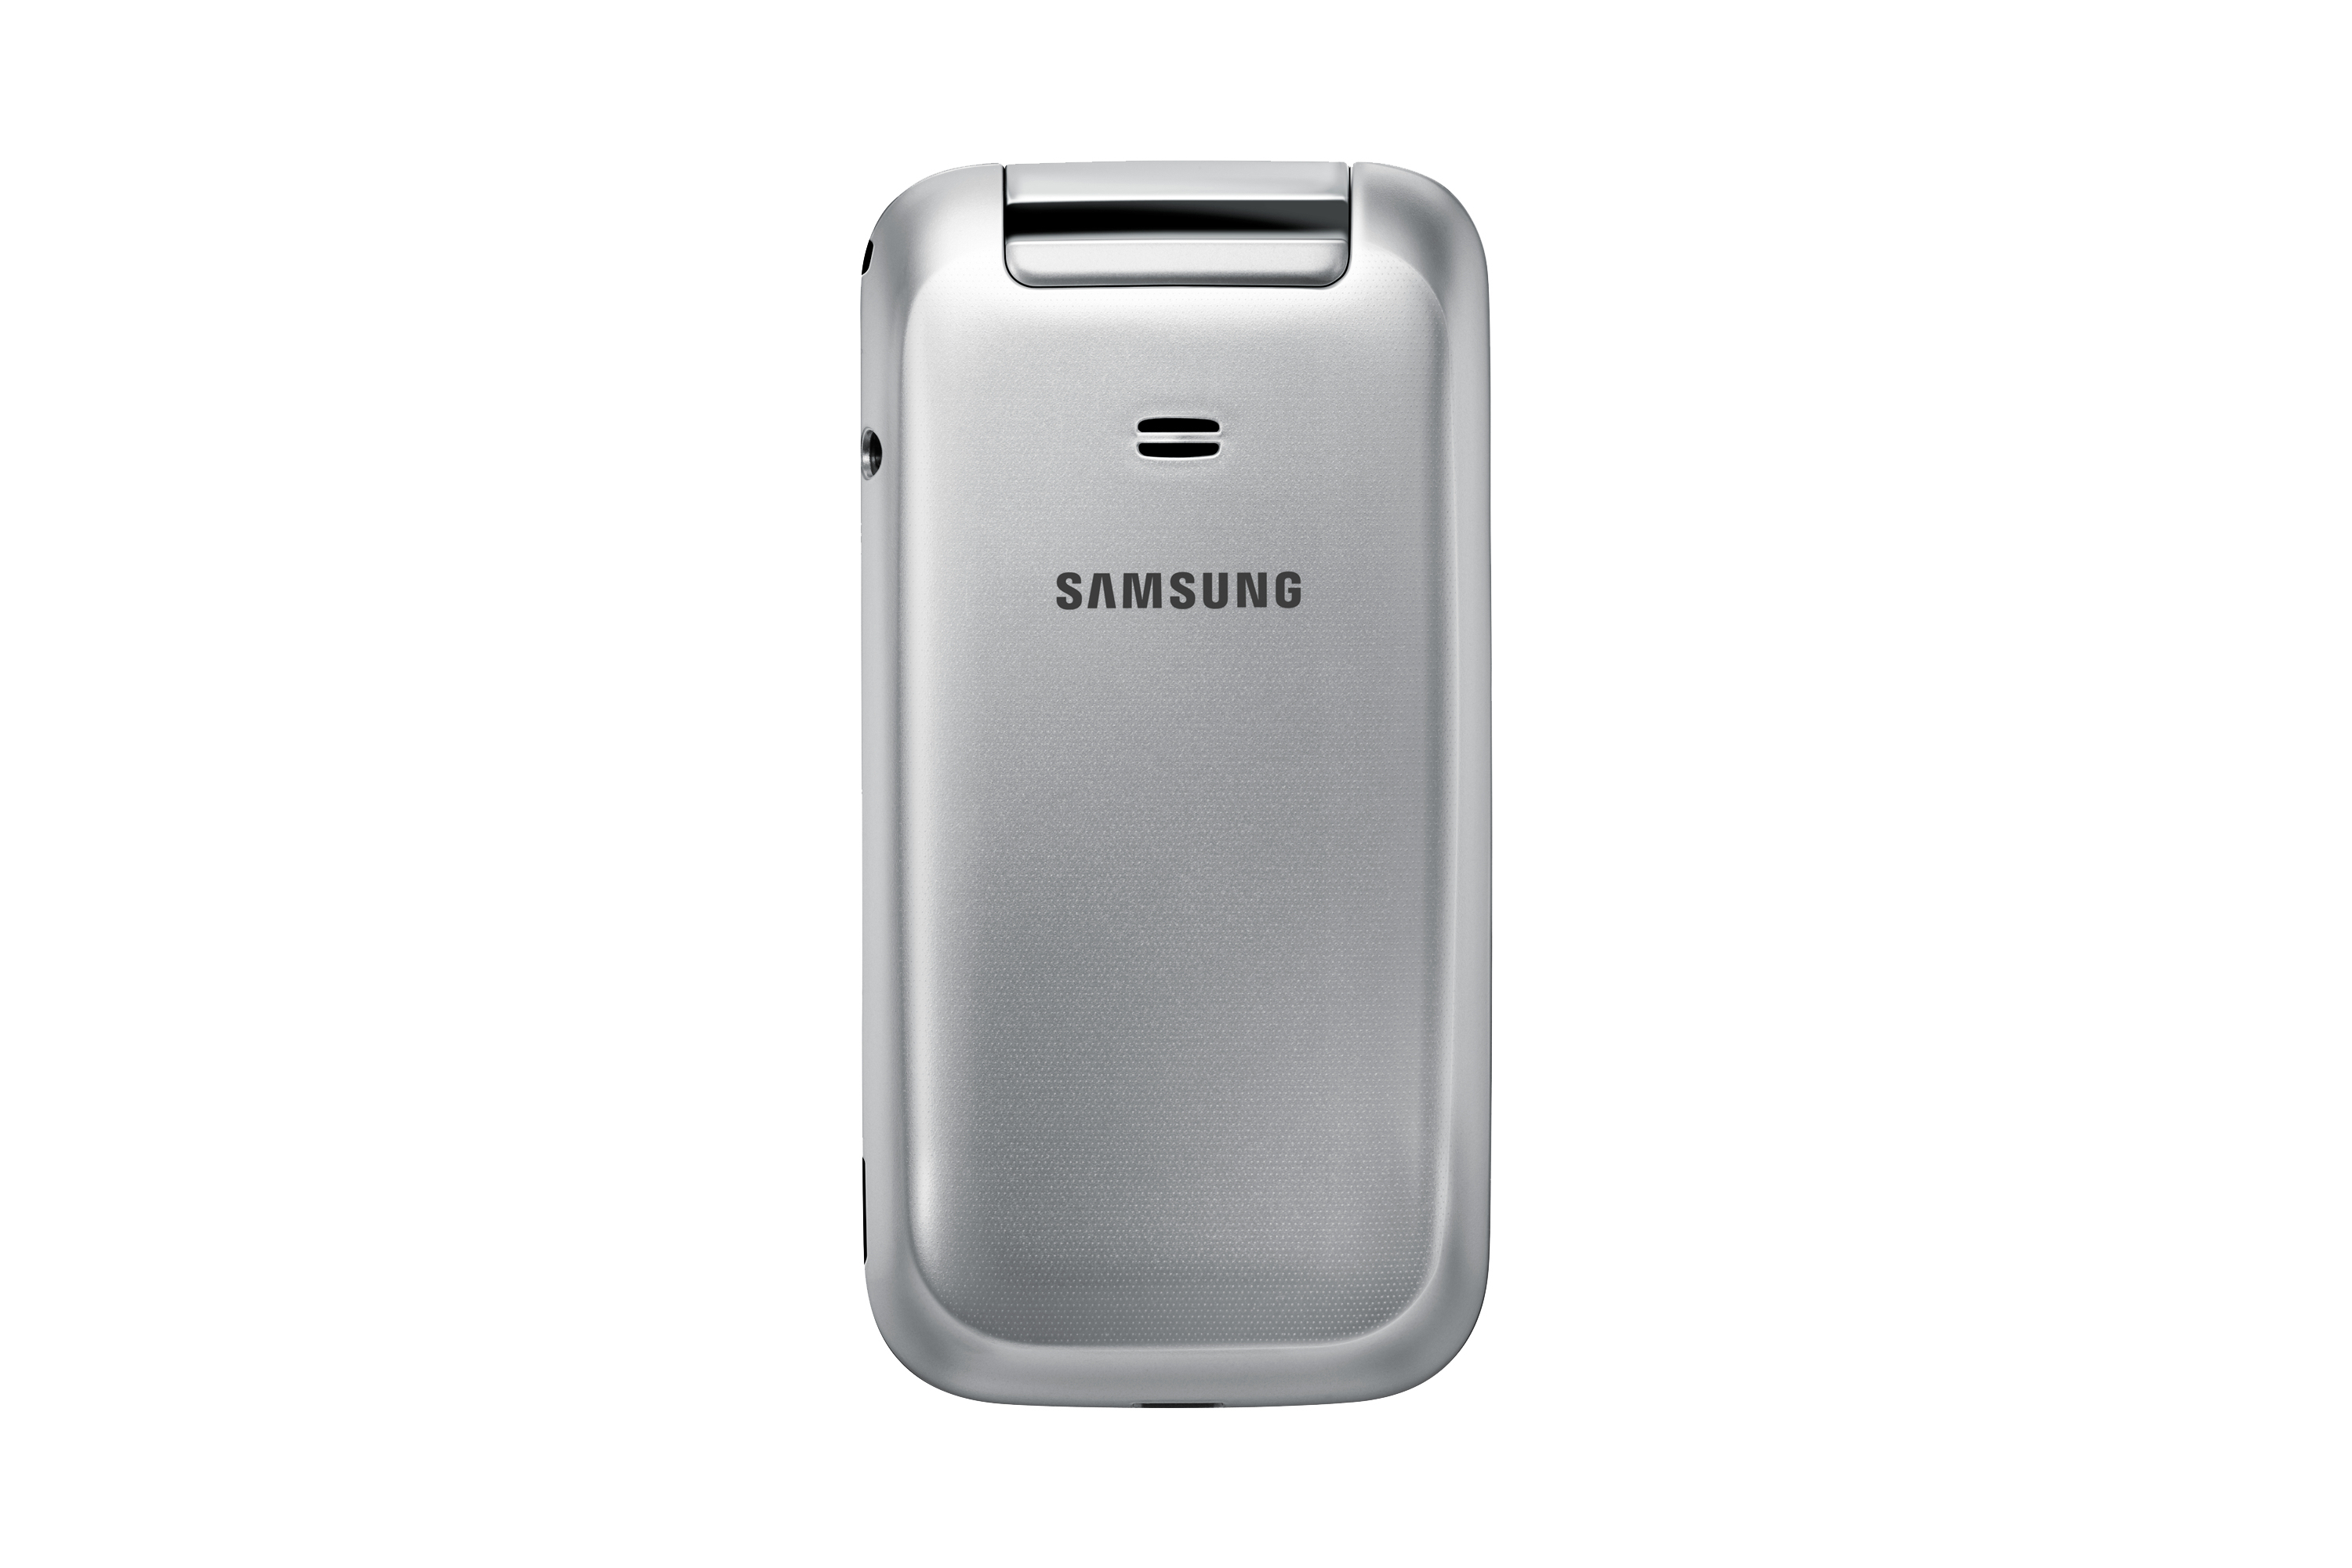 Samsung c3592 Silver